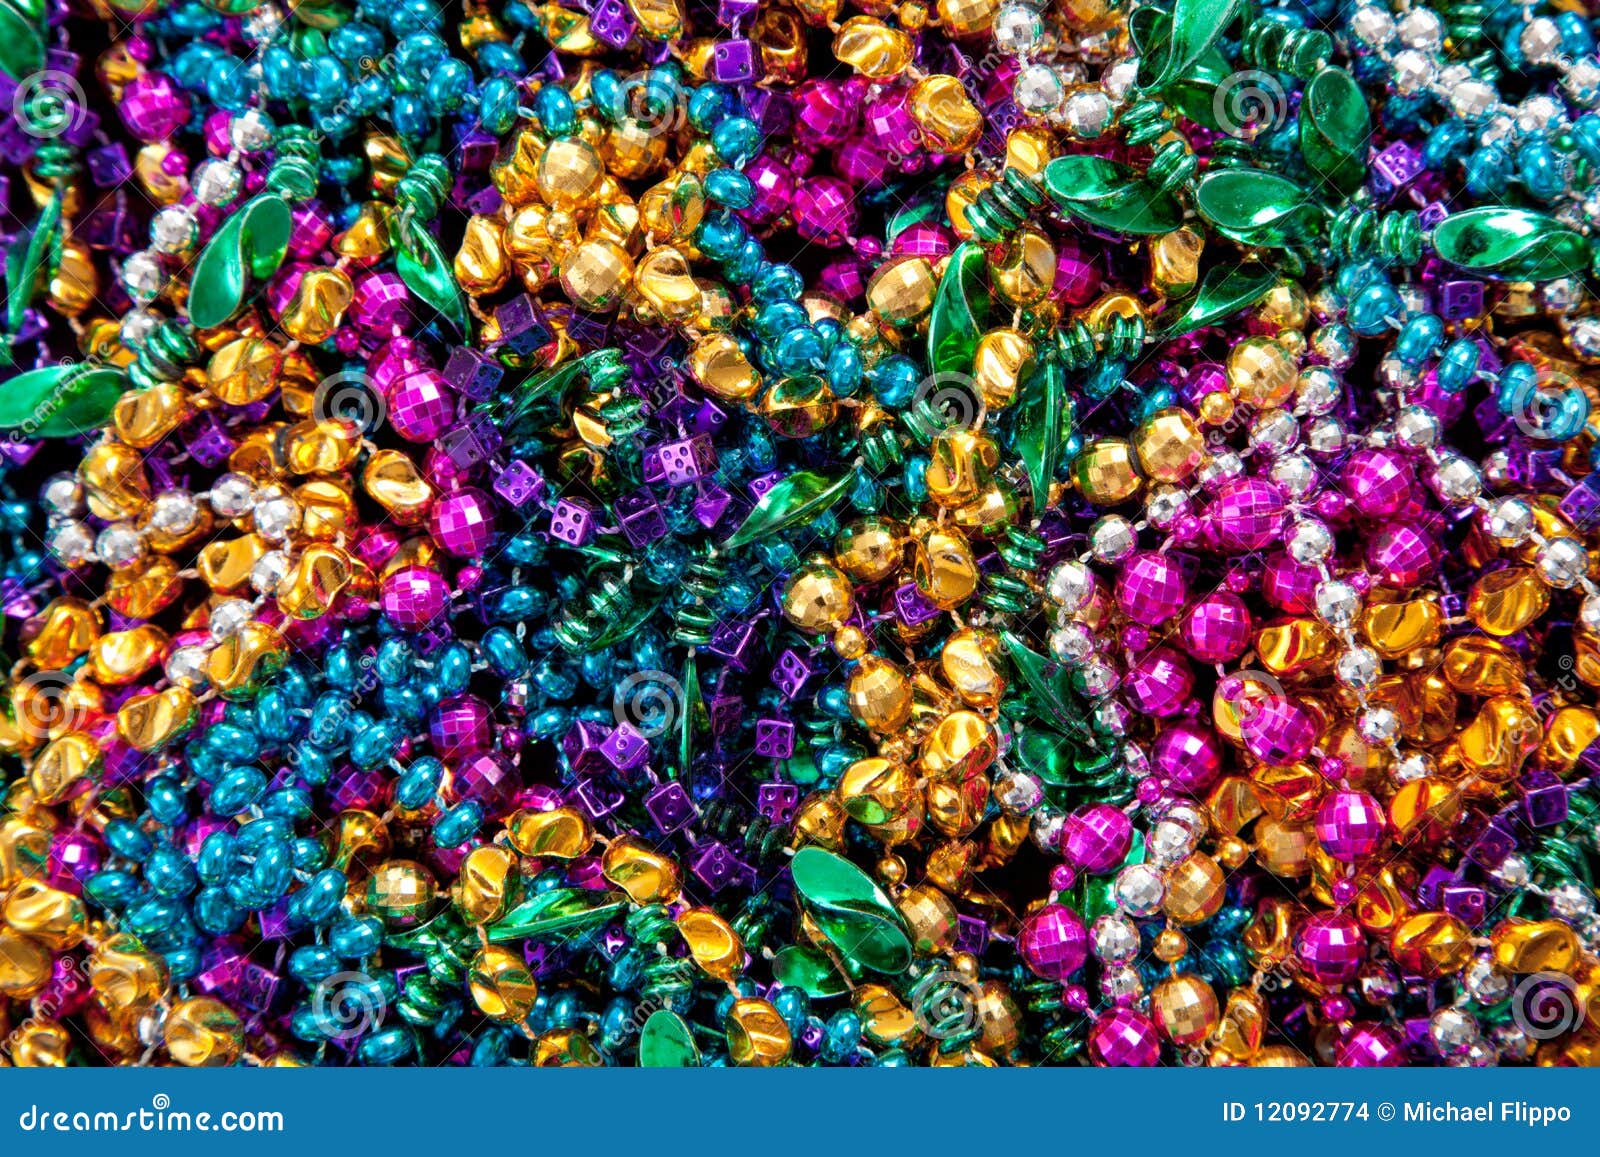 background of mardi gras beads